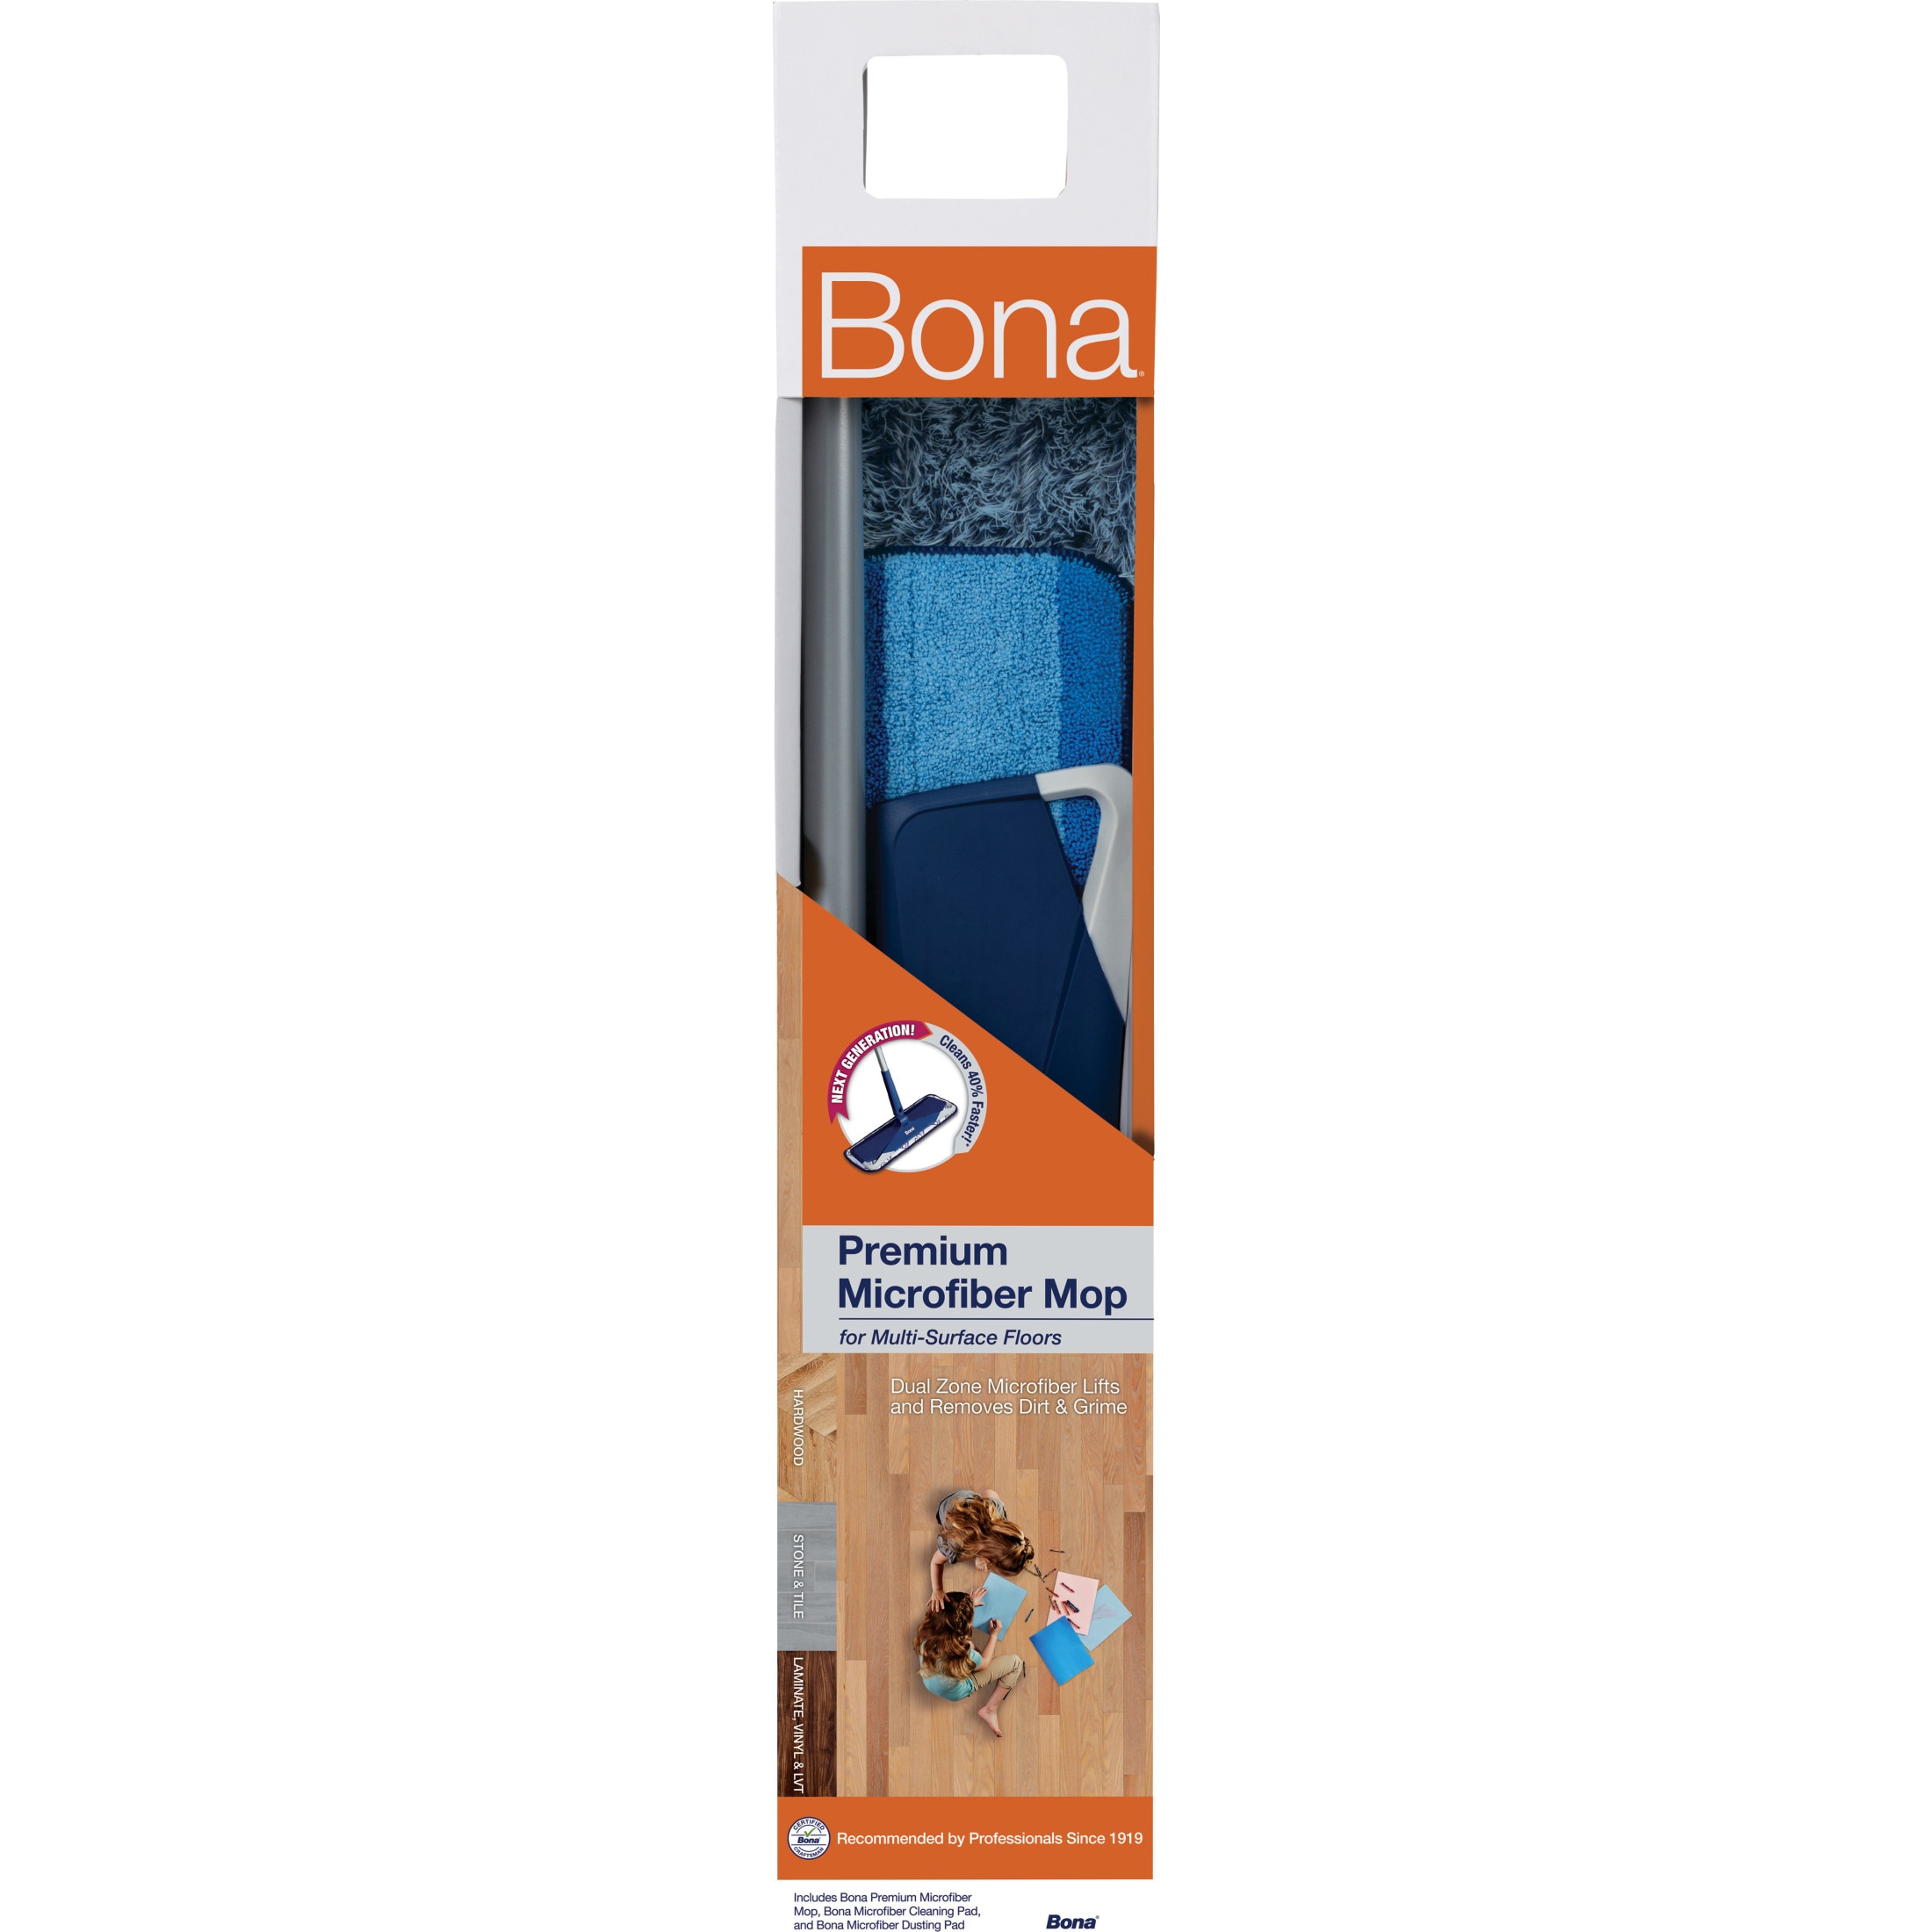 Bona® Premium Microfiber Mop for Multi-Surface Floors